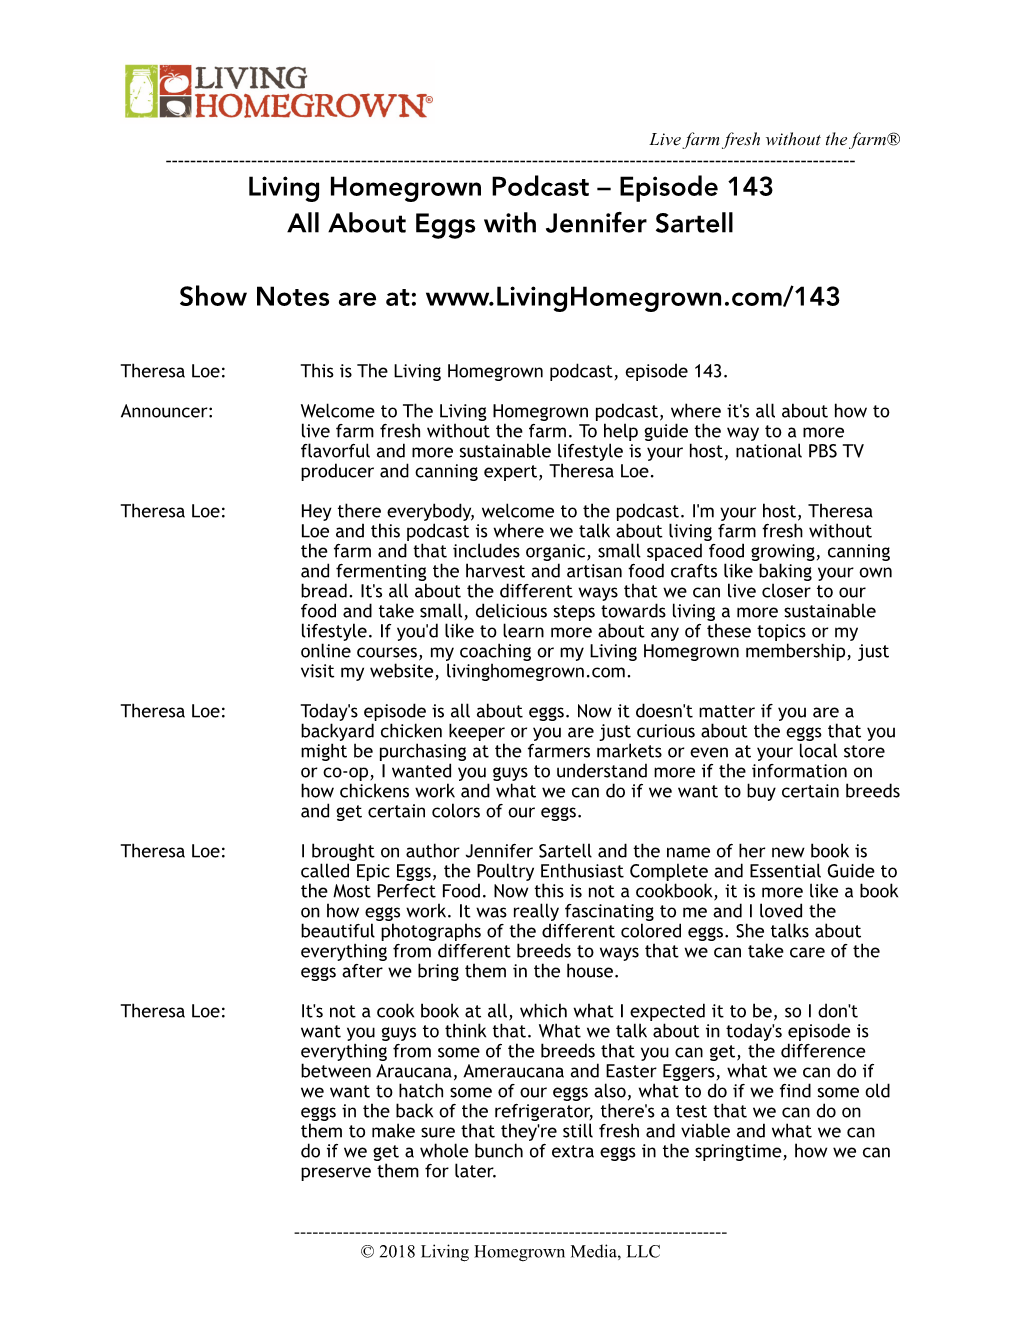 LH 143 Living Homegrown Podcast Transcript